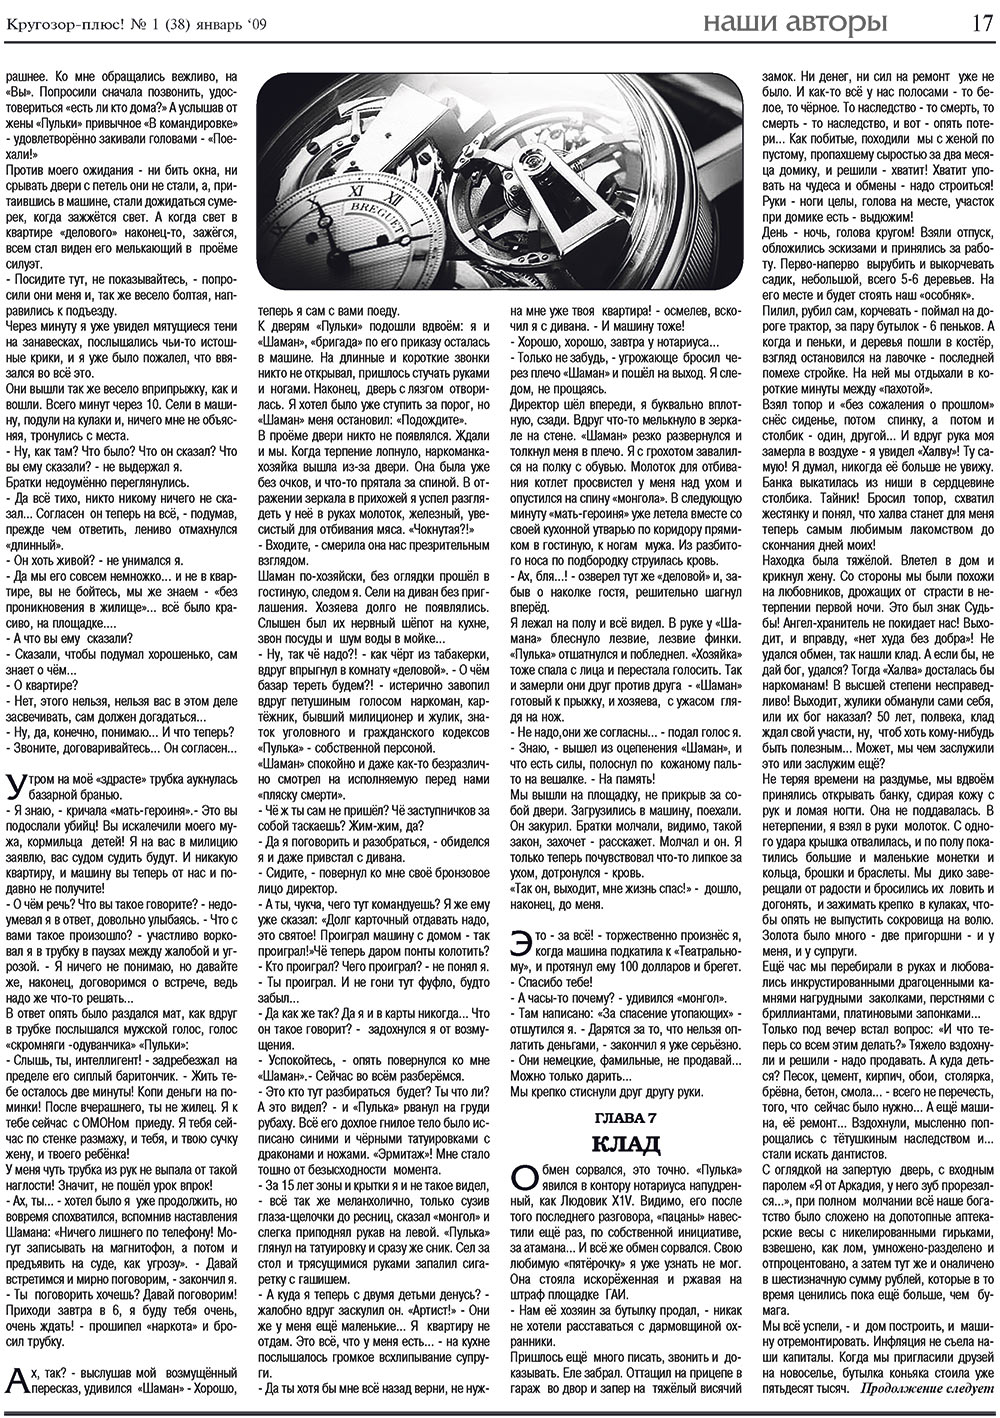 Кругозор плюс! (газета). 2009 год, номер 1, стр. 17